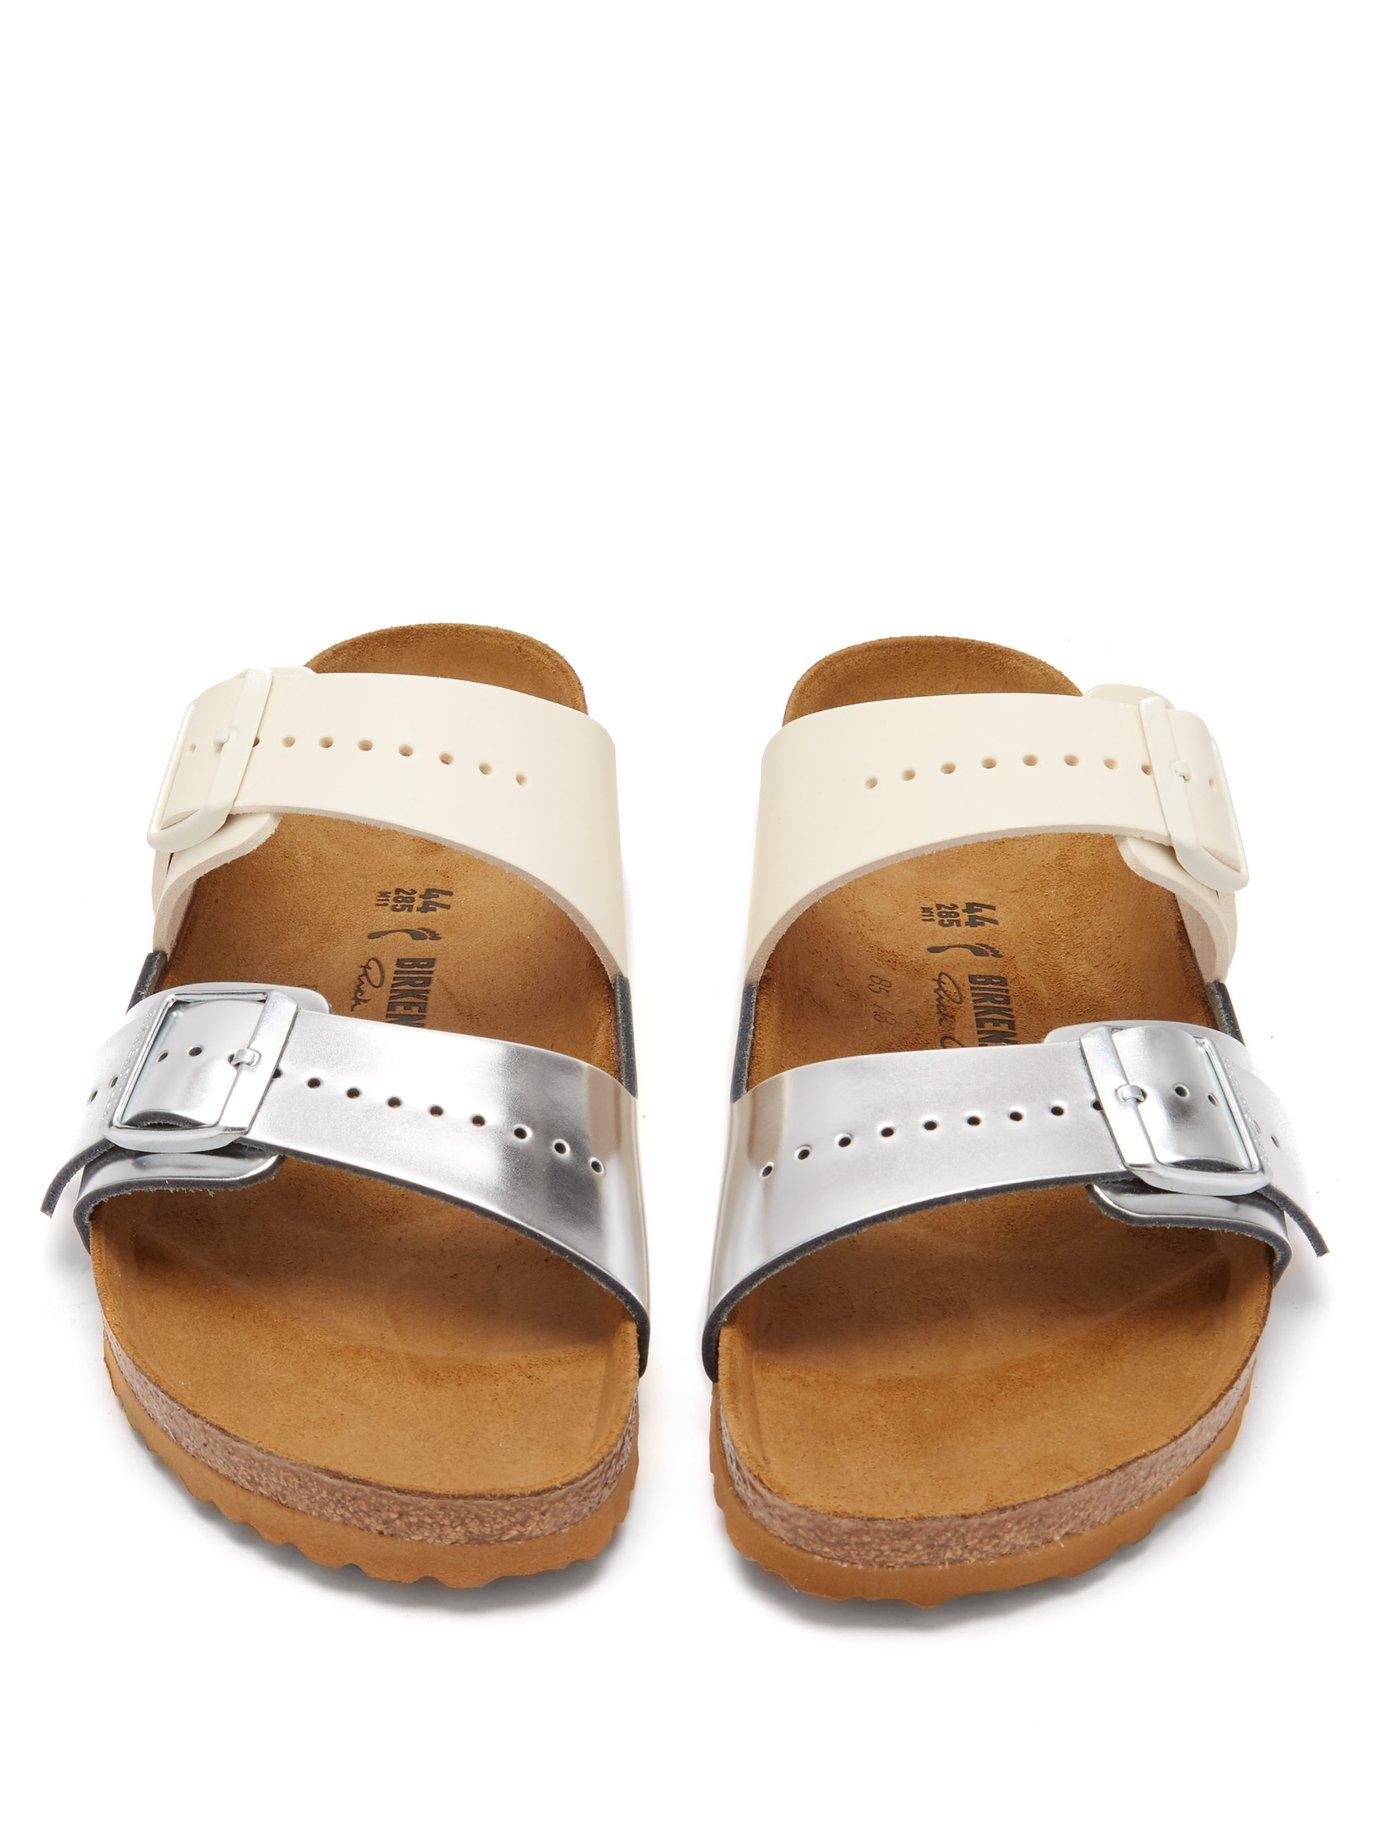 Rick Owens X Birkenstock Arizona Leather Sandals for Men - Lyst